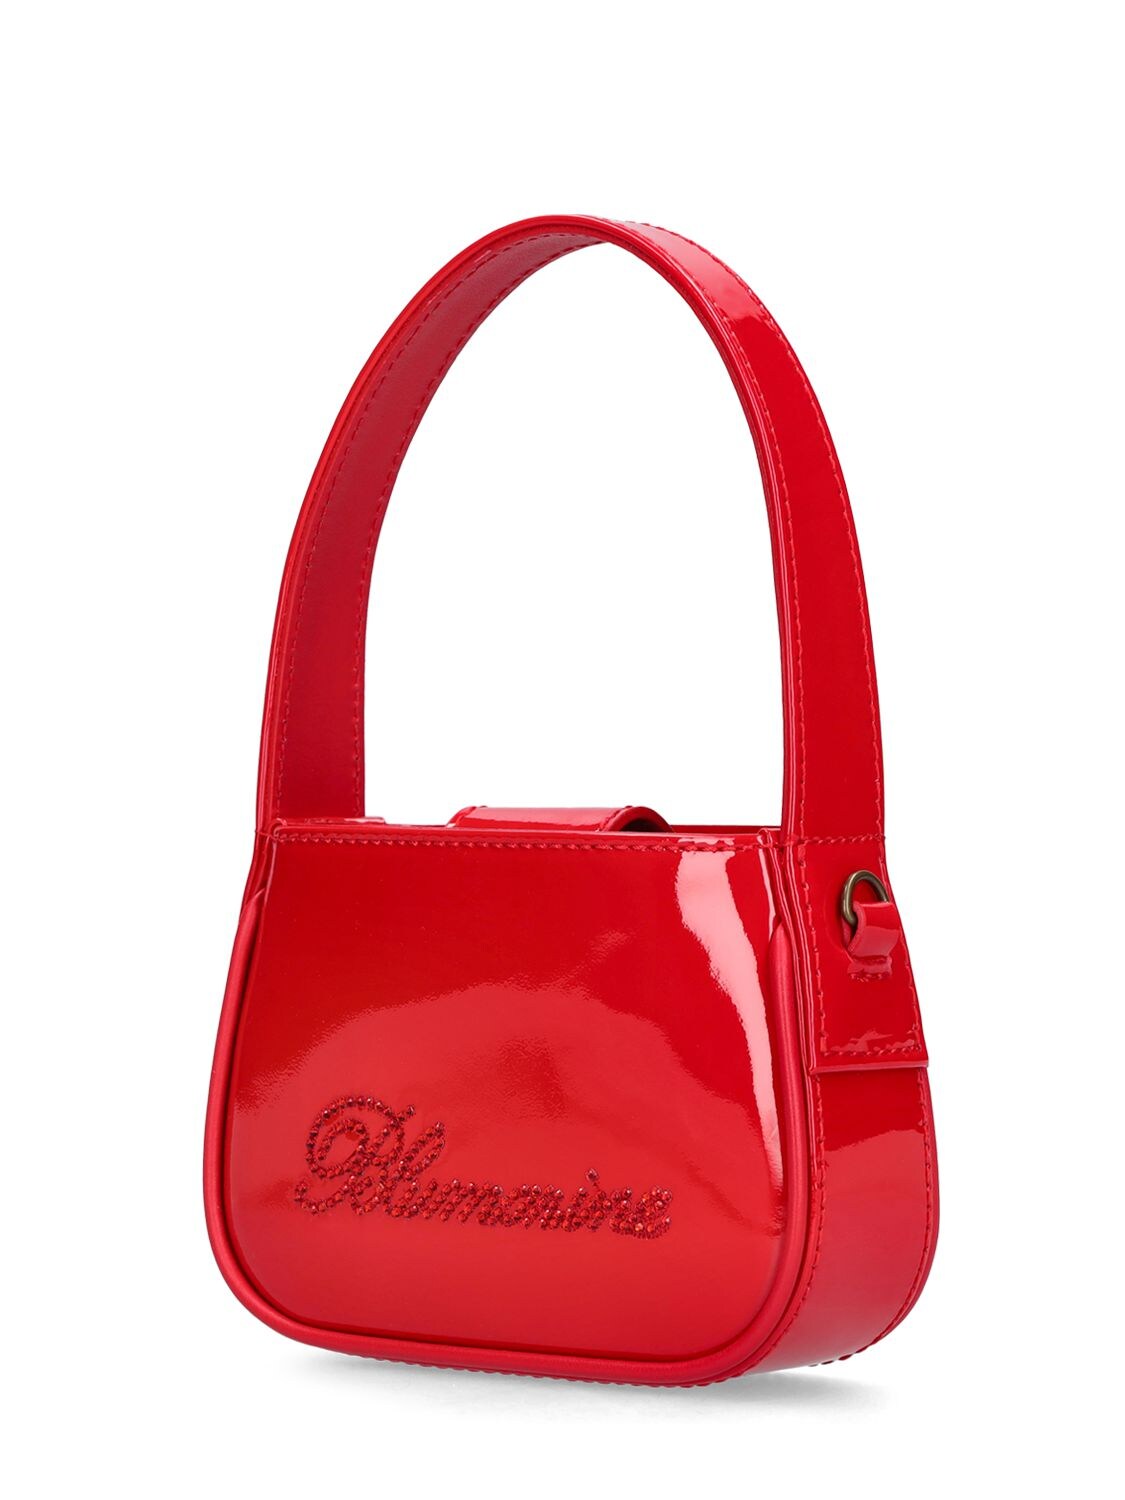 Blumarine Mini Kiss Me Bag in Patent Leather